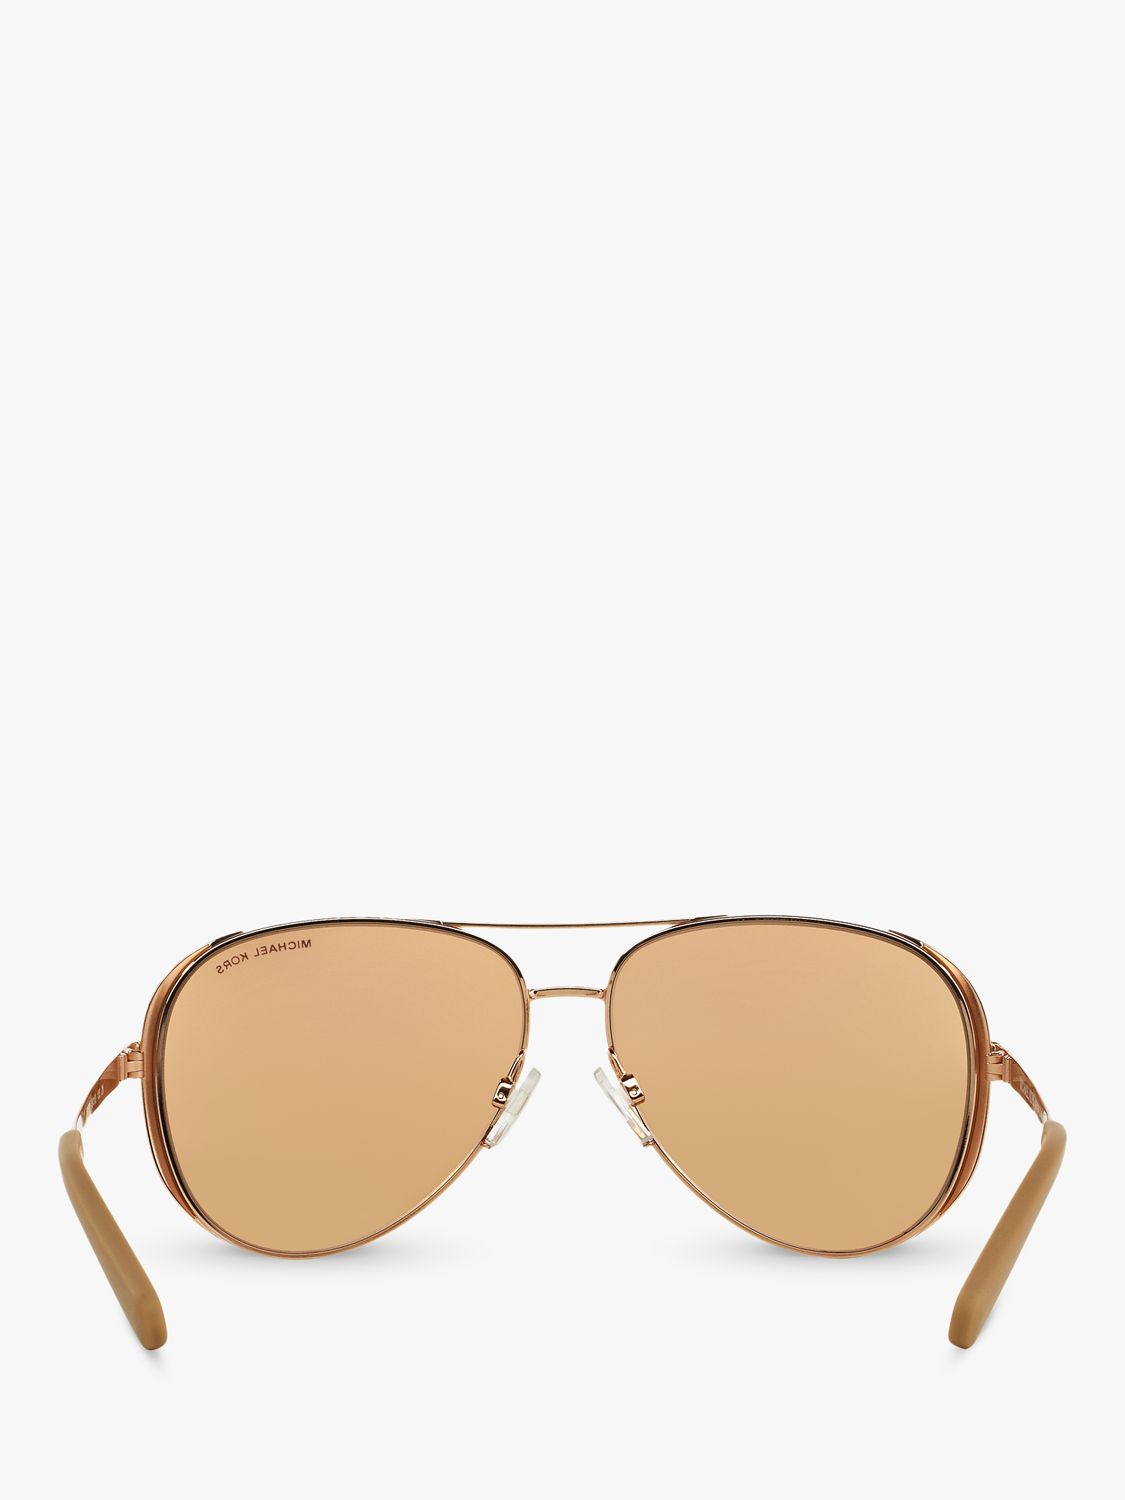 Michael Kors MK5004 Women's Chelsea Aviator Sunglasses, Gold/Mirror ...